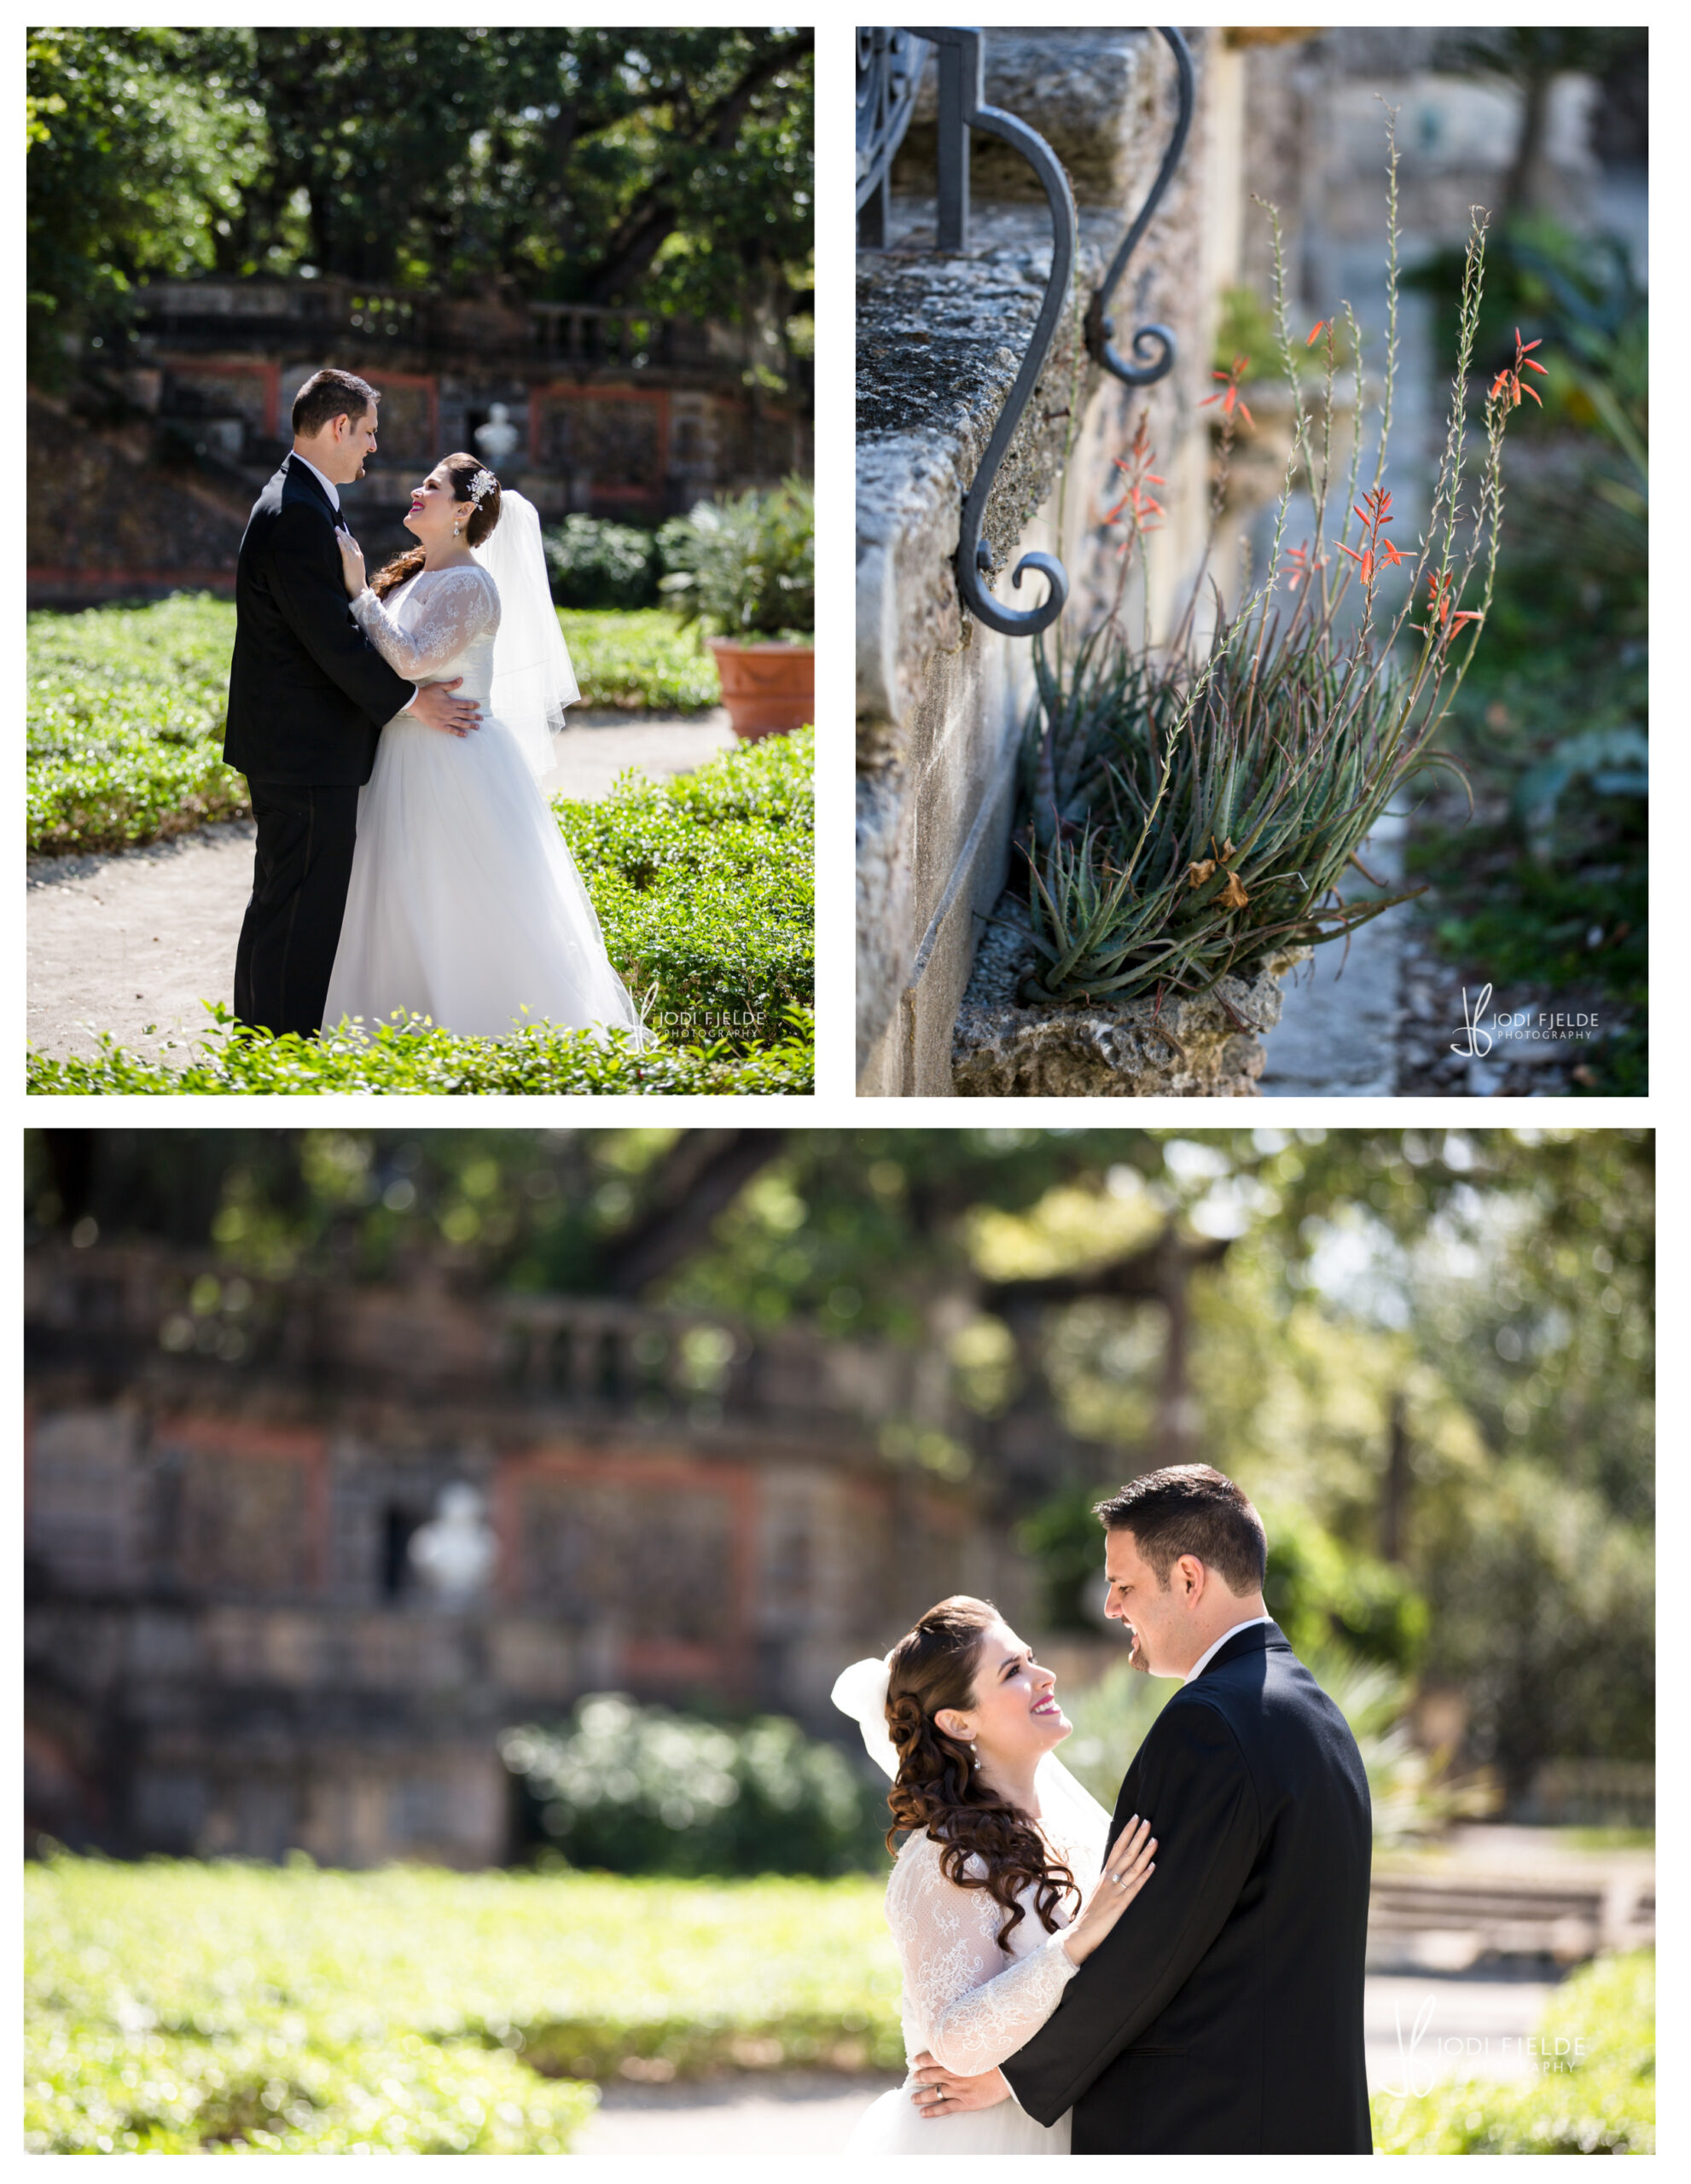 Vizcaya_Miami_Florida_Bridal_Wedding_Portraits_Jodi_Fjelde_Photography-2.jpg